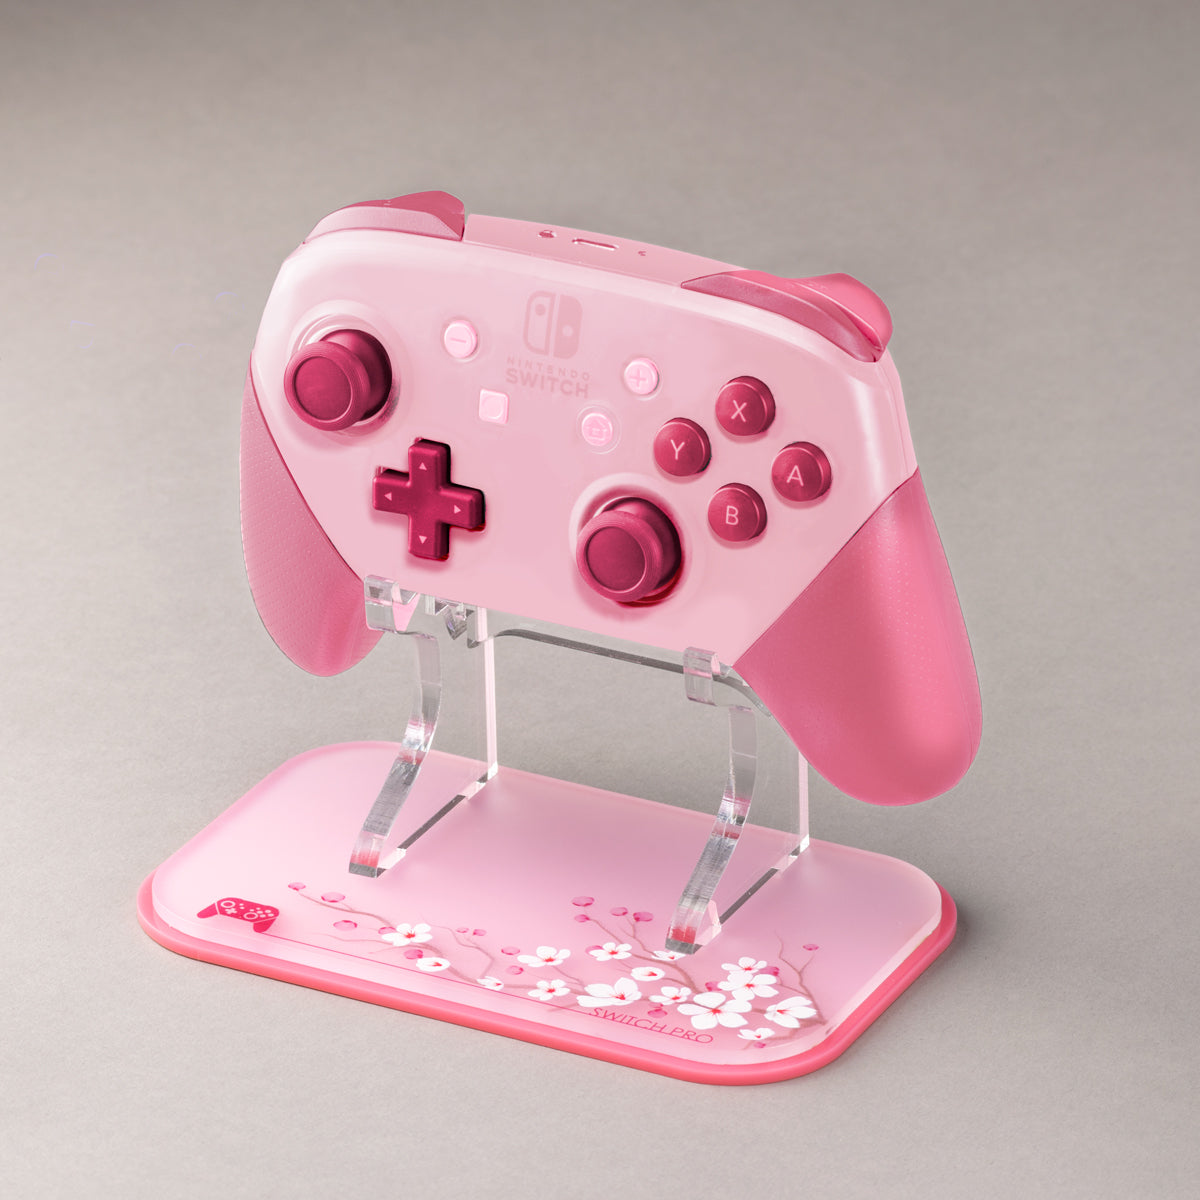 Sakura Blossom Switch Pro Display – Rose Colored Gaming